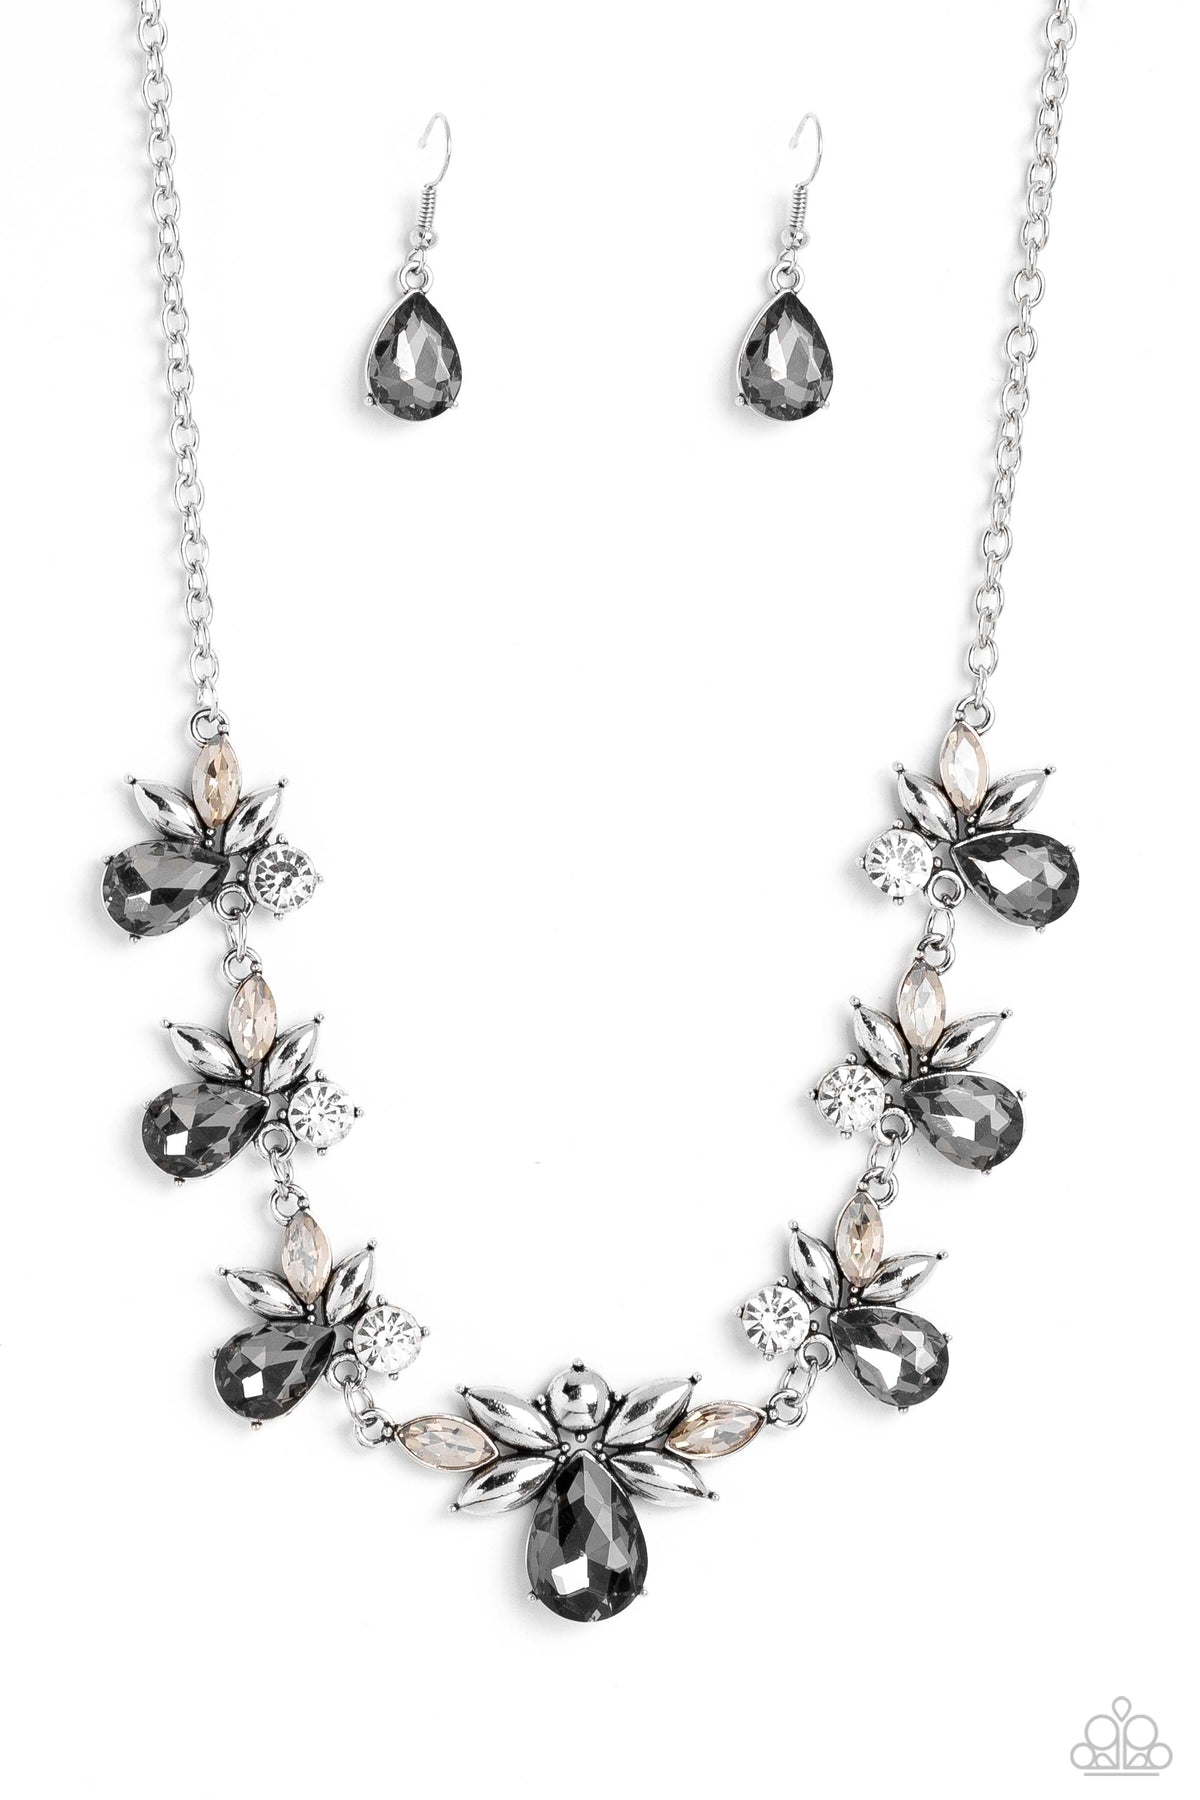 Explosive Effulgence Silver &amp; White Rhinestone Necklace - Paparazzi Accessories- lightbox - CarasShop.com - $5 Jewelry by Cara Jewels